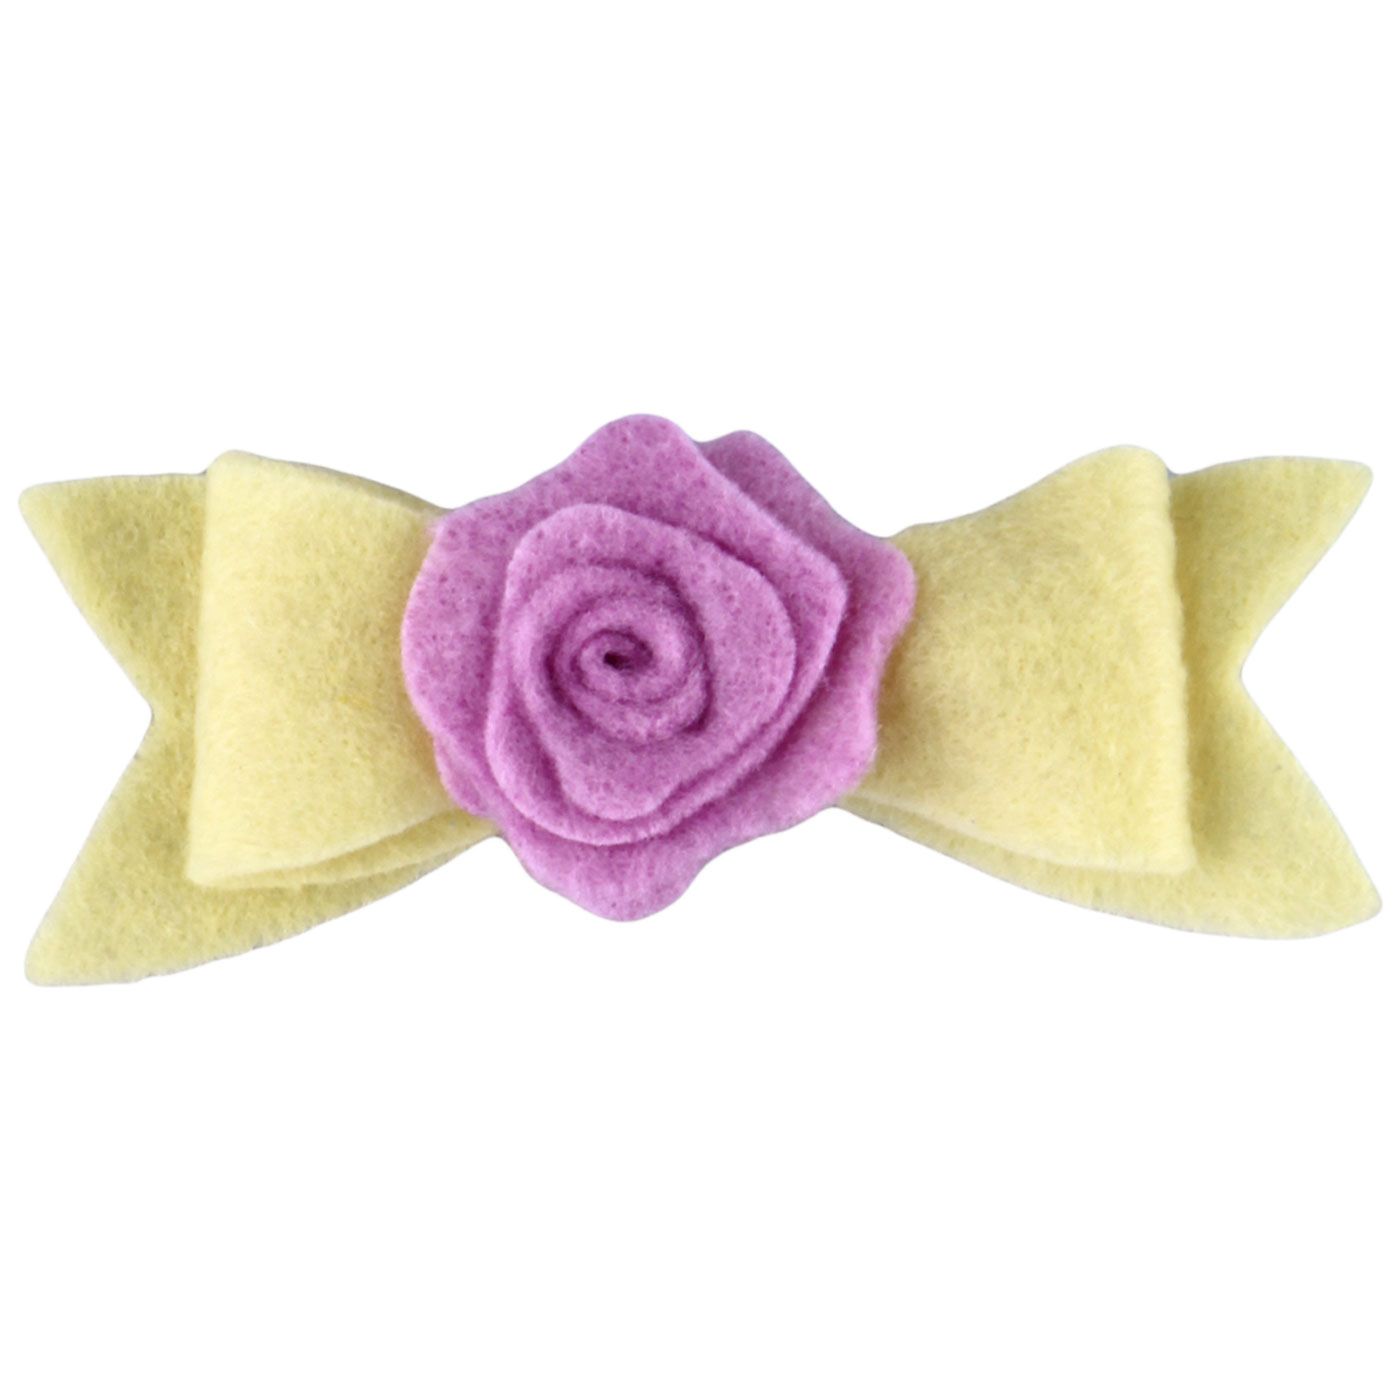 Bebecroc Felt Bow&Flower Clip Primrose Yellow&Violet - 1